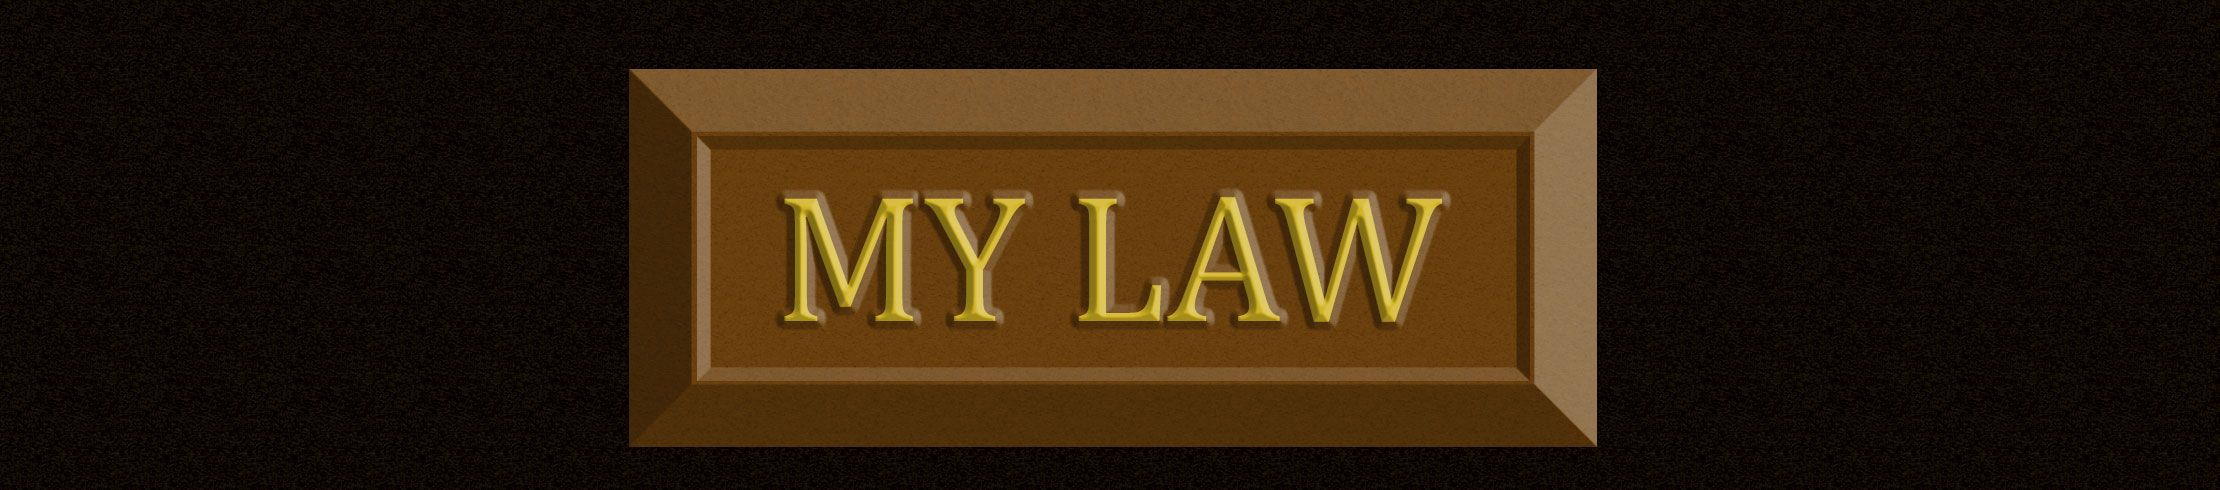 My Law